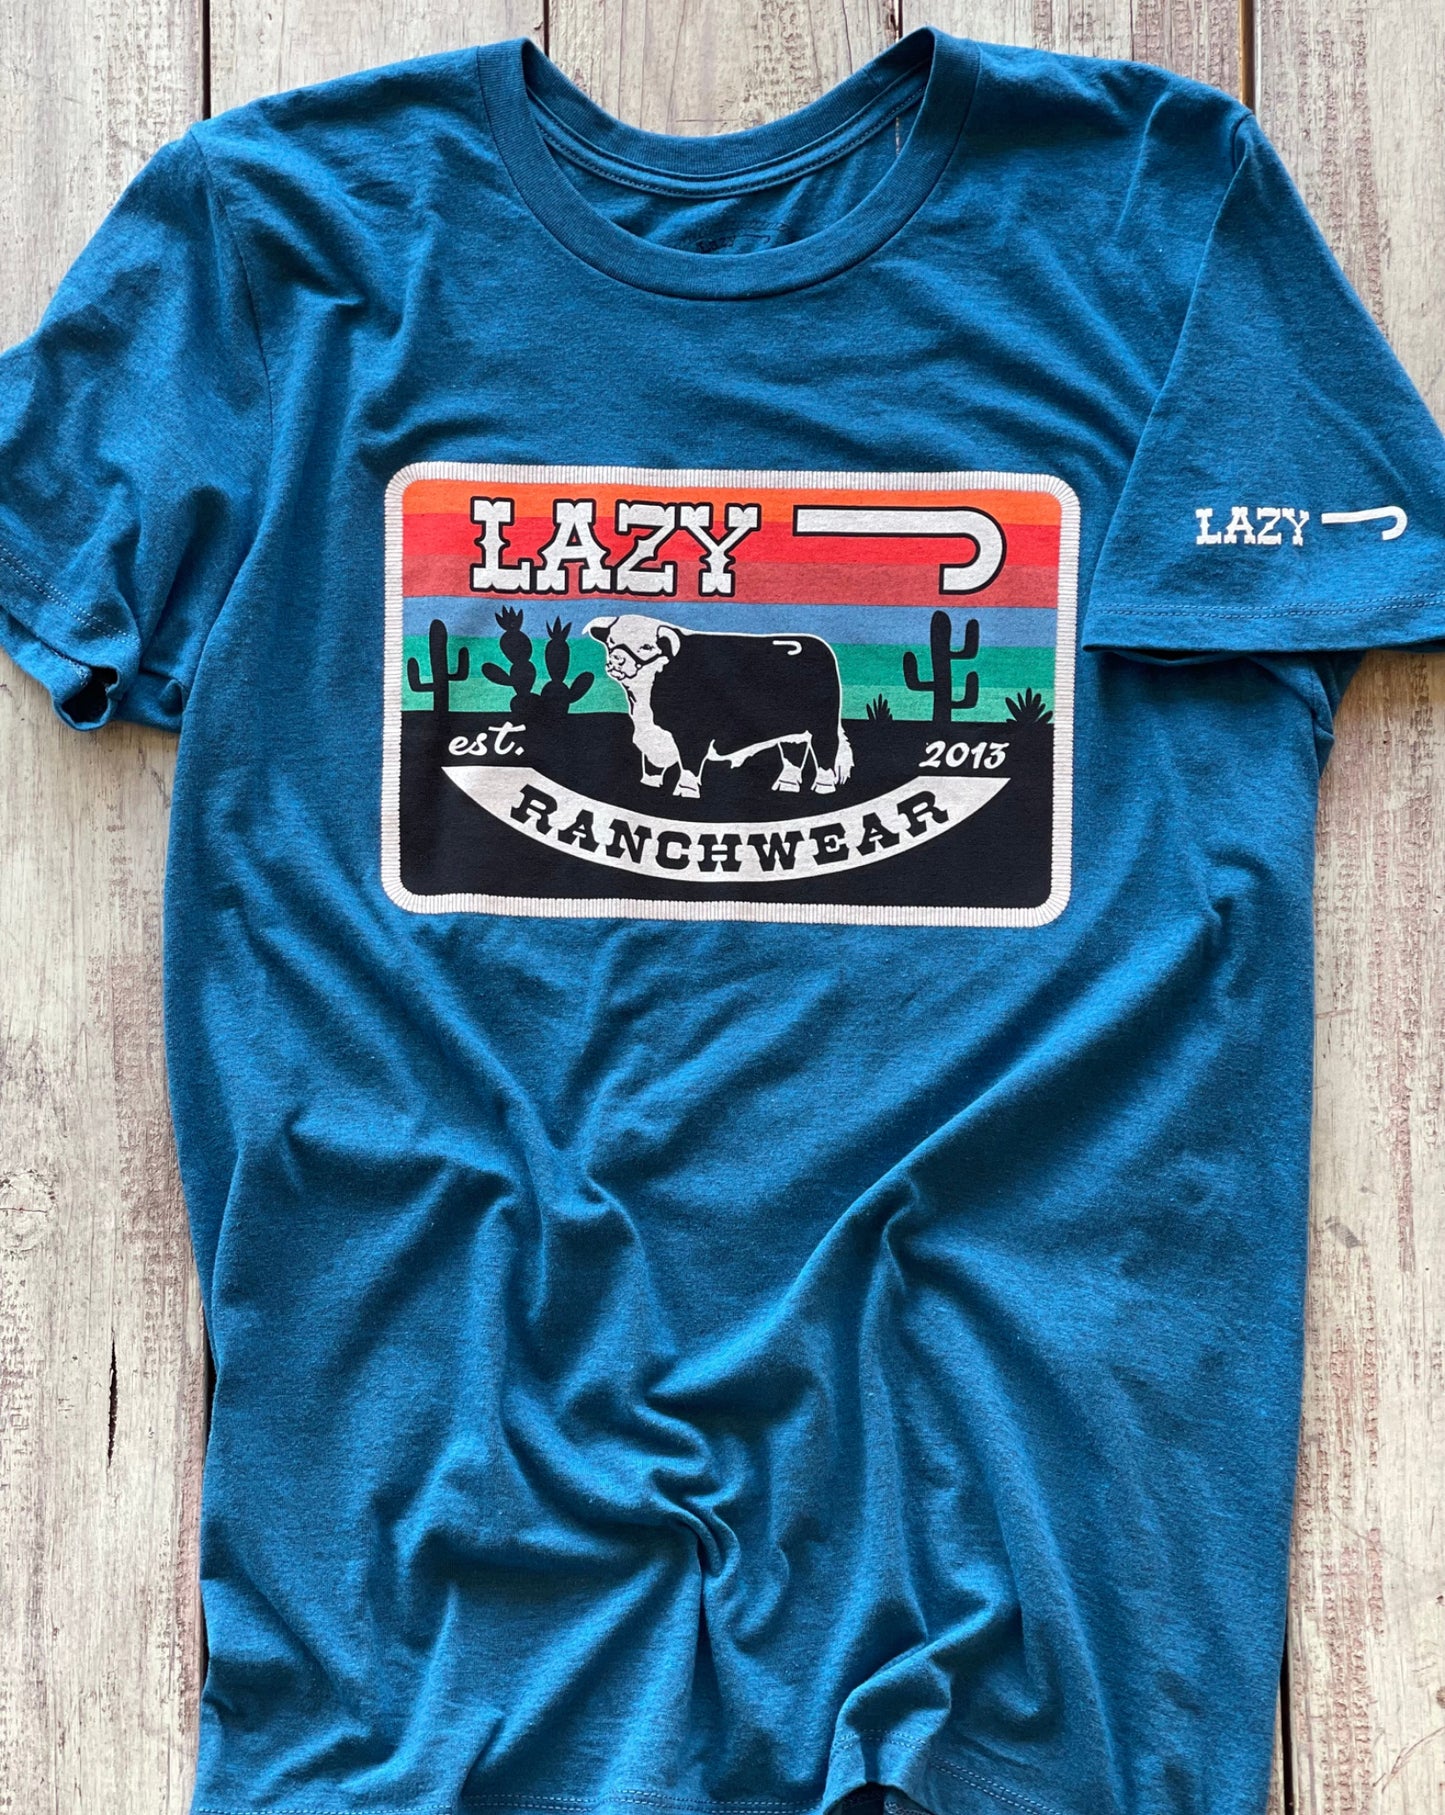 Lazy J Ranch Wear Multi Jug Hereford Sky T-Shirt - Blue